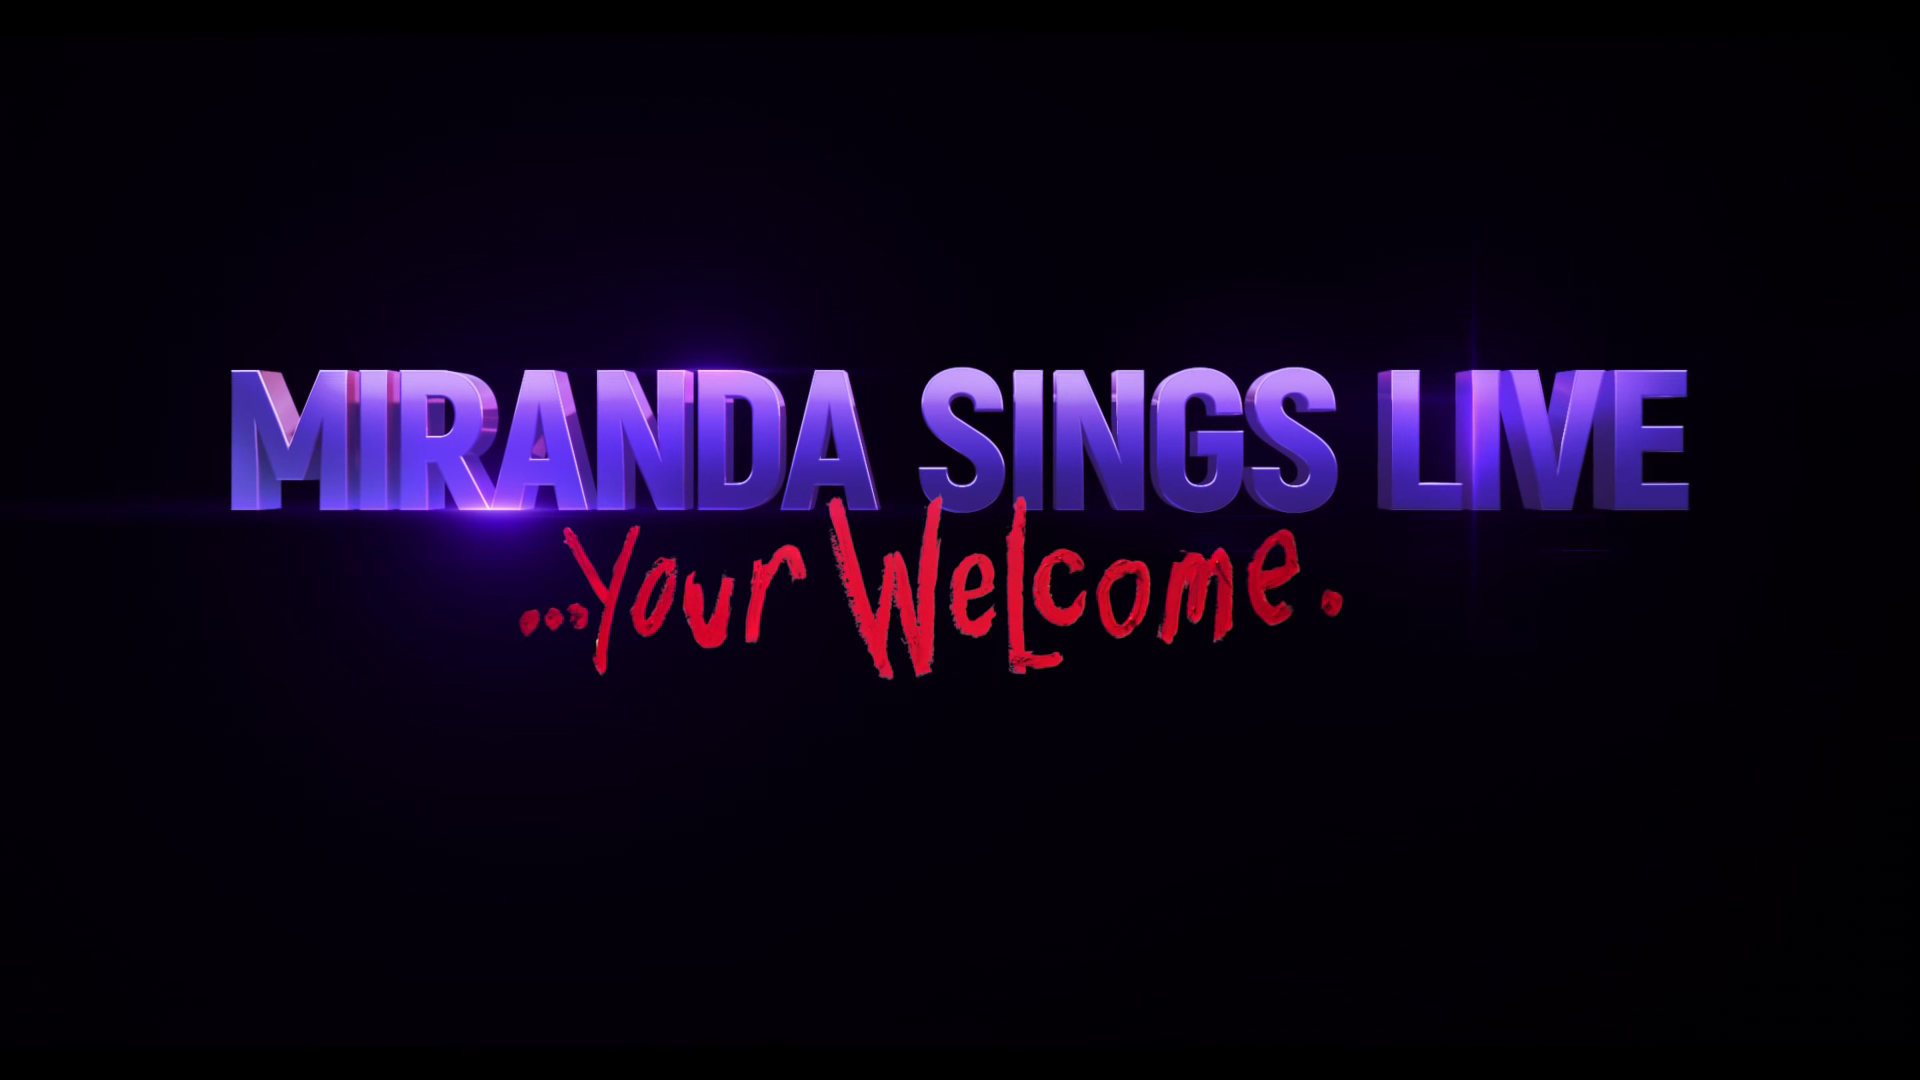 Miranda Sings Live Your Welcome Netflix Trailer, Netflix Comedy Shows Miranda Sings Live Your Welcome, New on Netflix, Netflix Comedy Specials